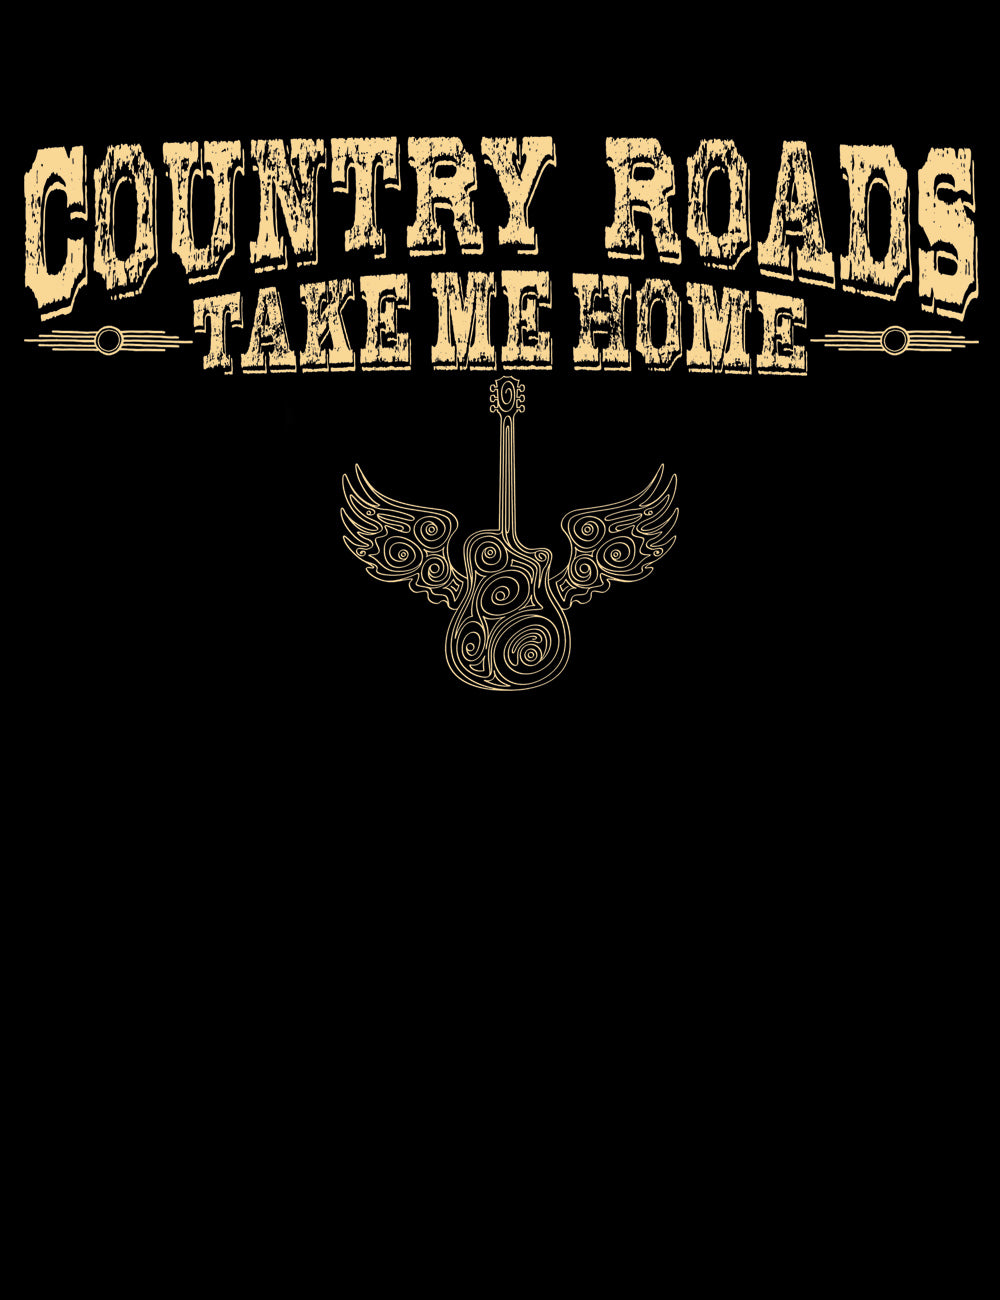 John Denver Country Roads Take Me Home Lyric T-Shirt